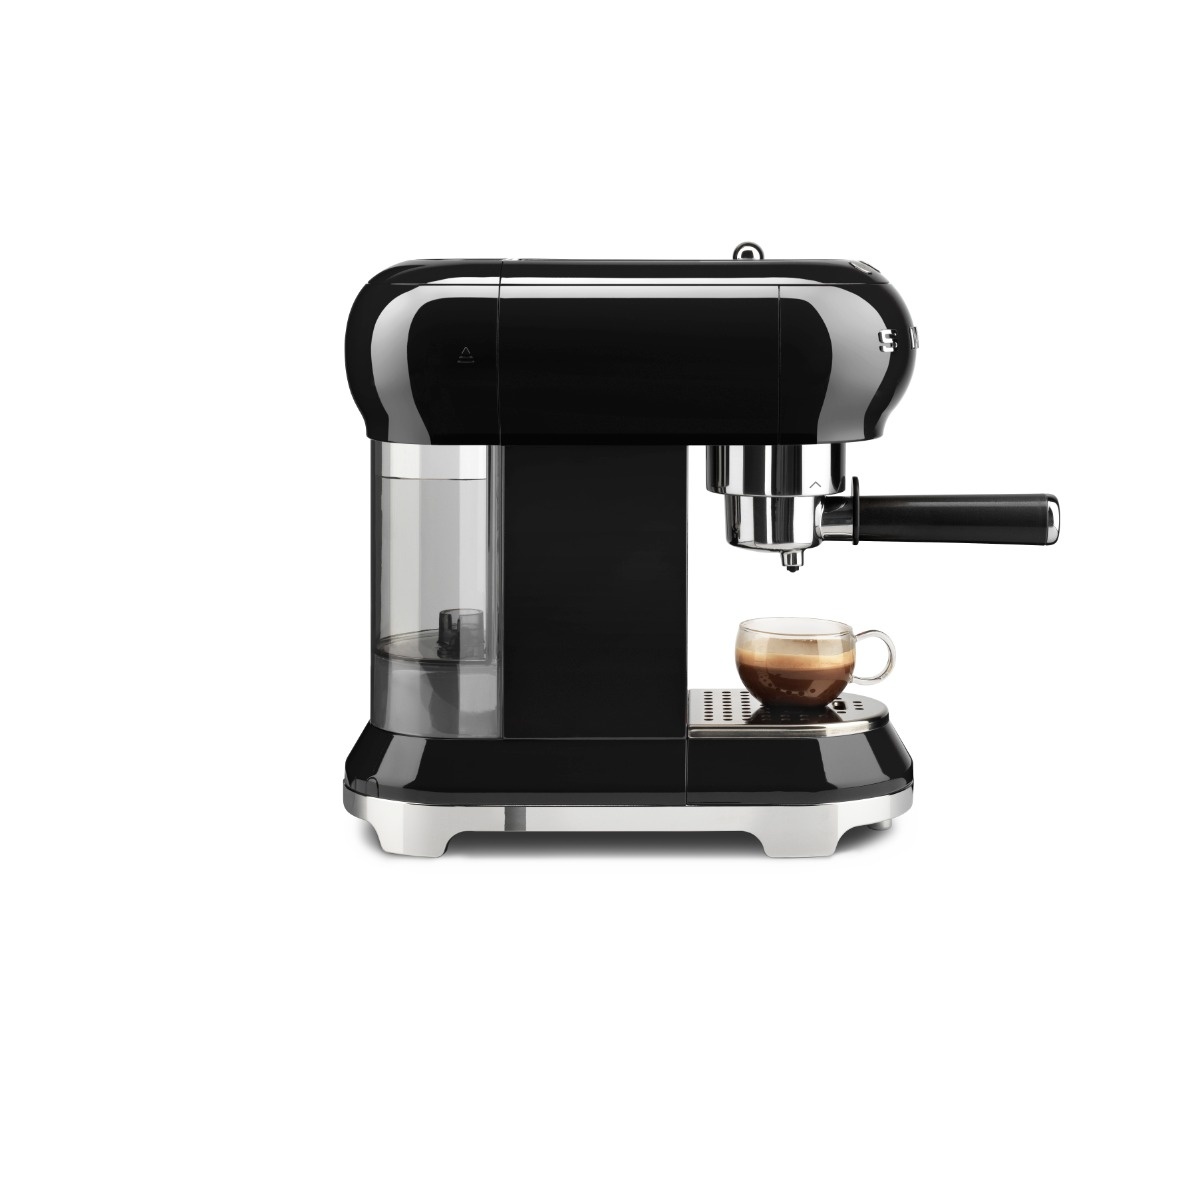 Buy Black Espresso Coffee Machine Smeg Philippines